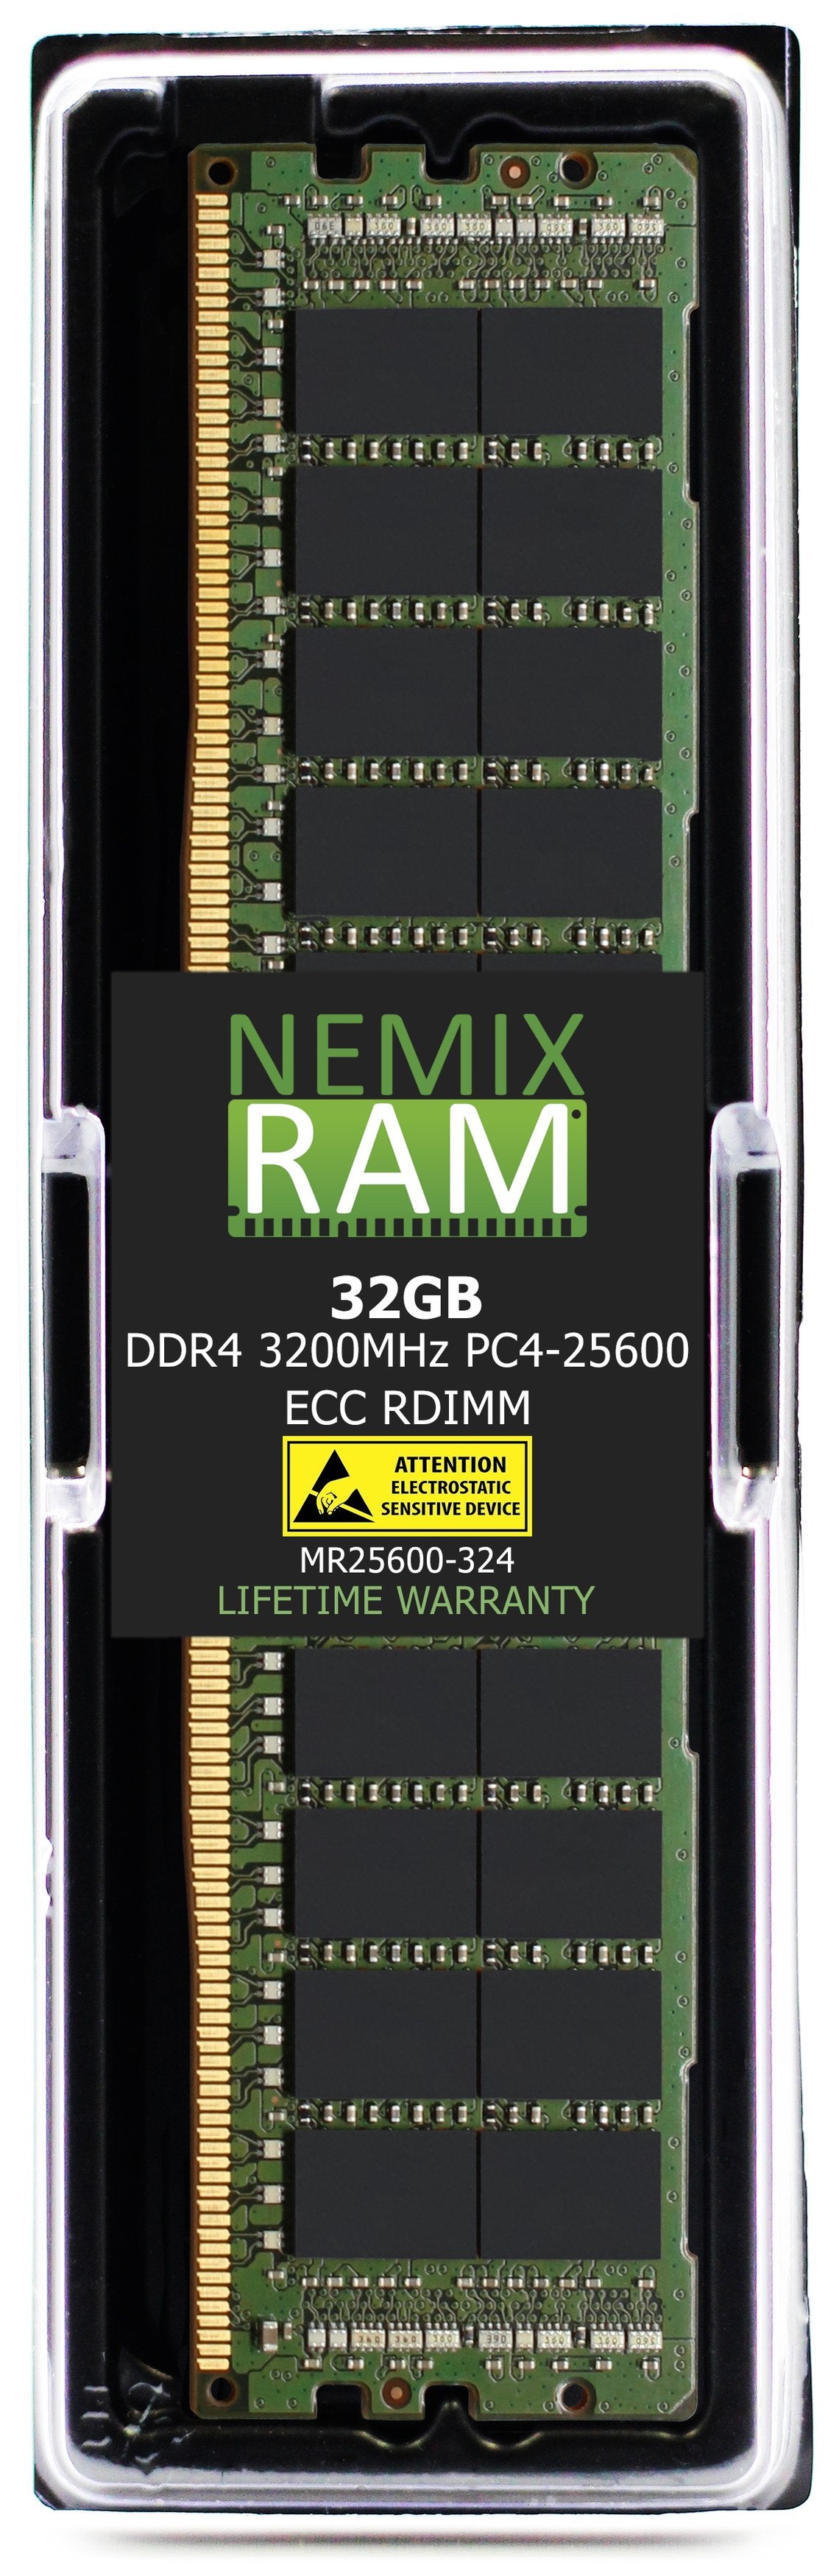 32GB DDR4 3200MHZ PC4-25600 RDIMM Compatible with Supermicro MEM-DR432L-HL02-ER32